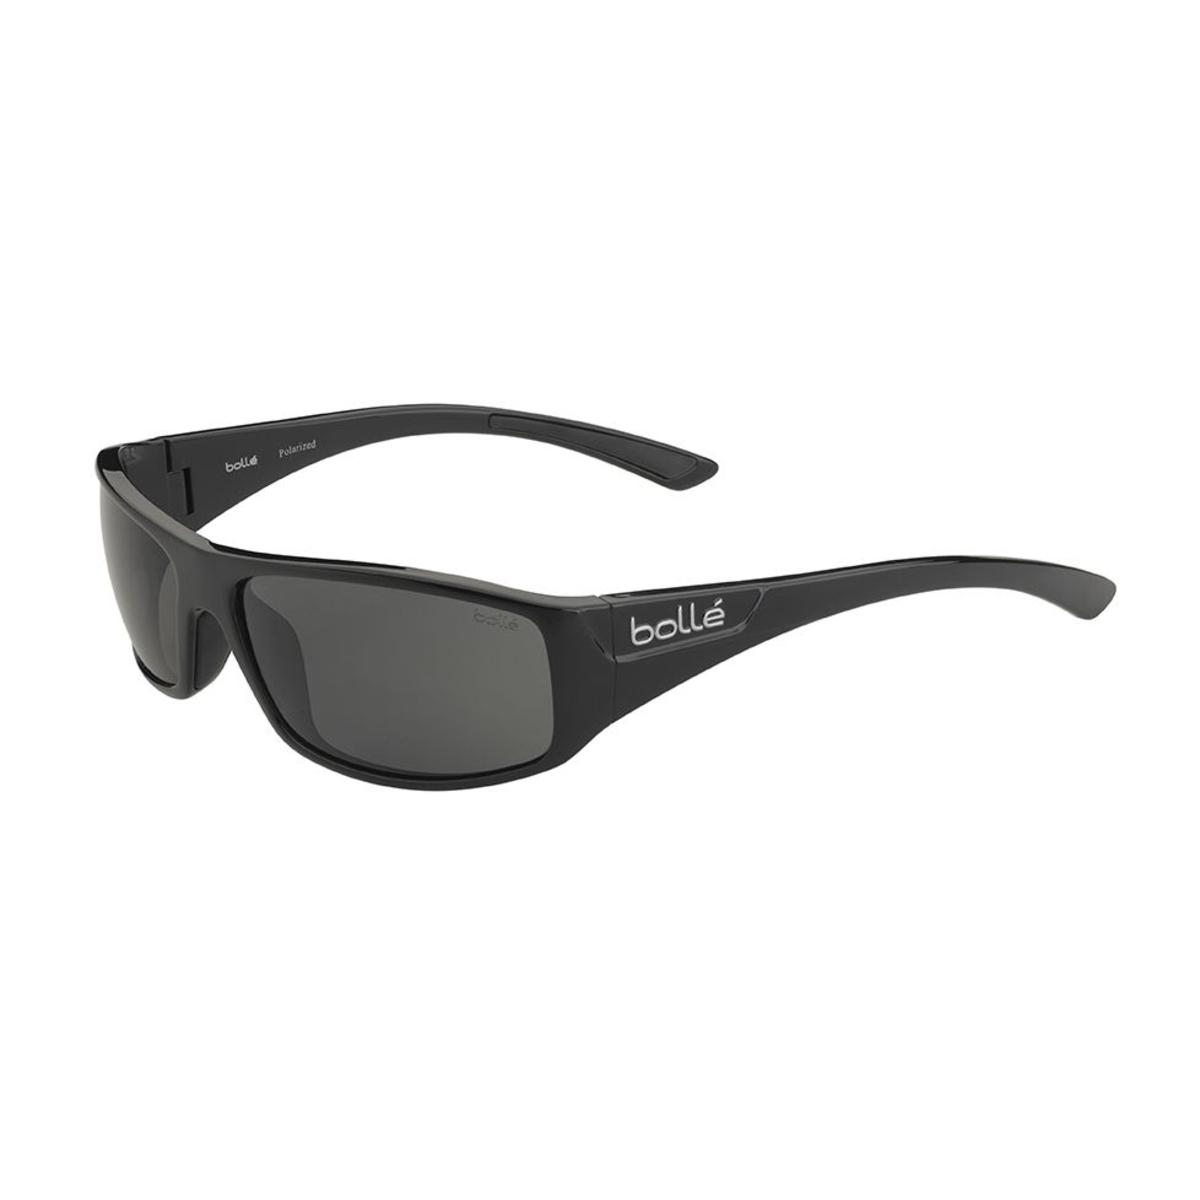 Bolle Bolt S 2.0 Photochromic Polarized Sunglasses, Black | Bikeinn